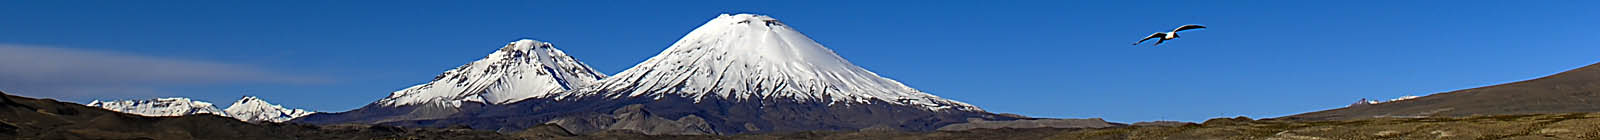 Parinacota, Pomerape, volcanoes, Bolivia - Banner